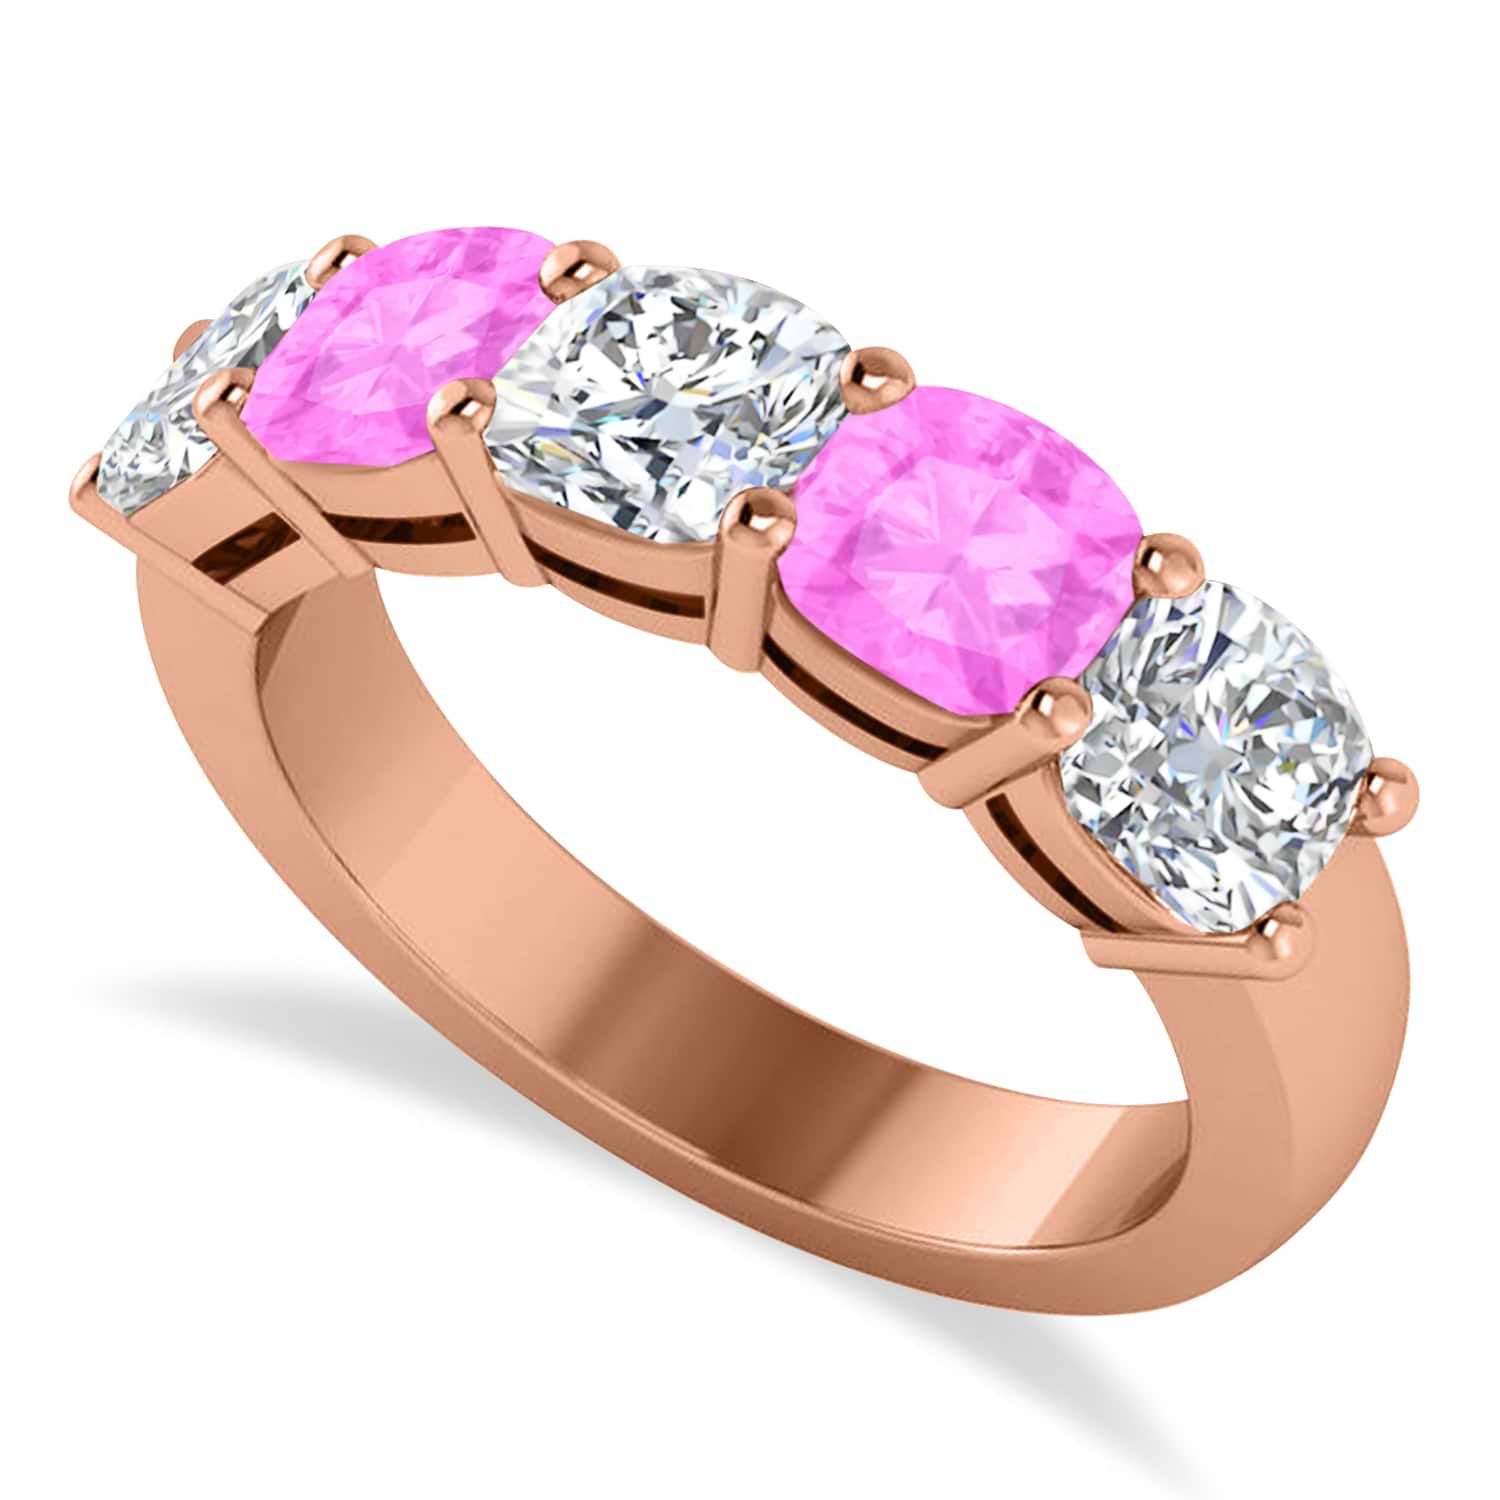 Cushion Diamond & Pink Sapphire Five Stone Ring 14k Rose Gold (2.70ct)